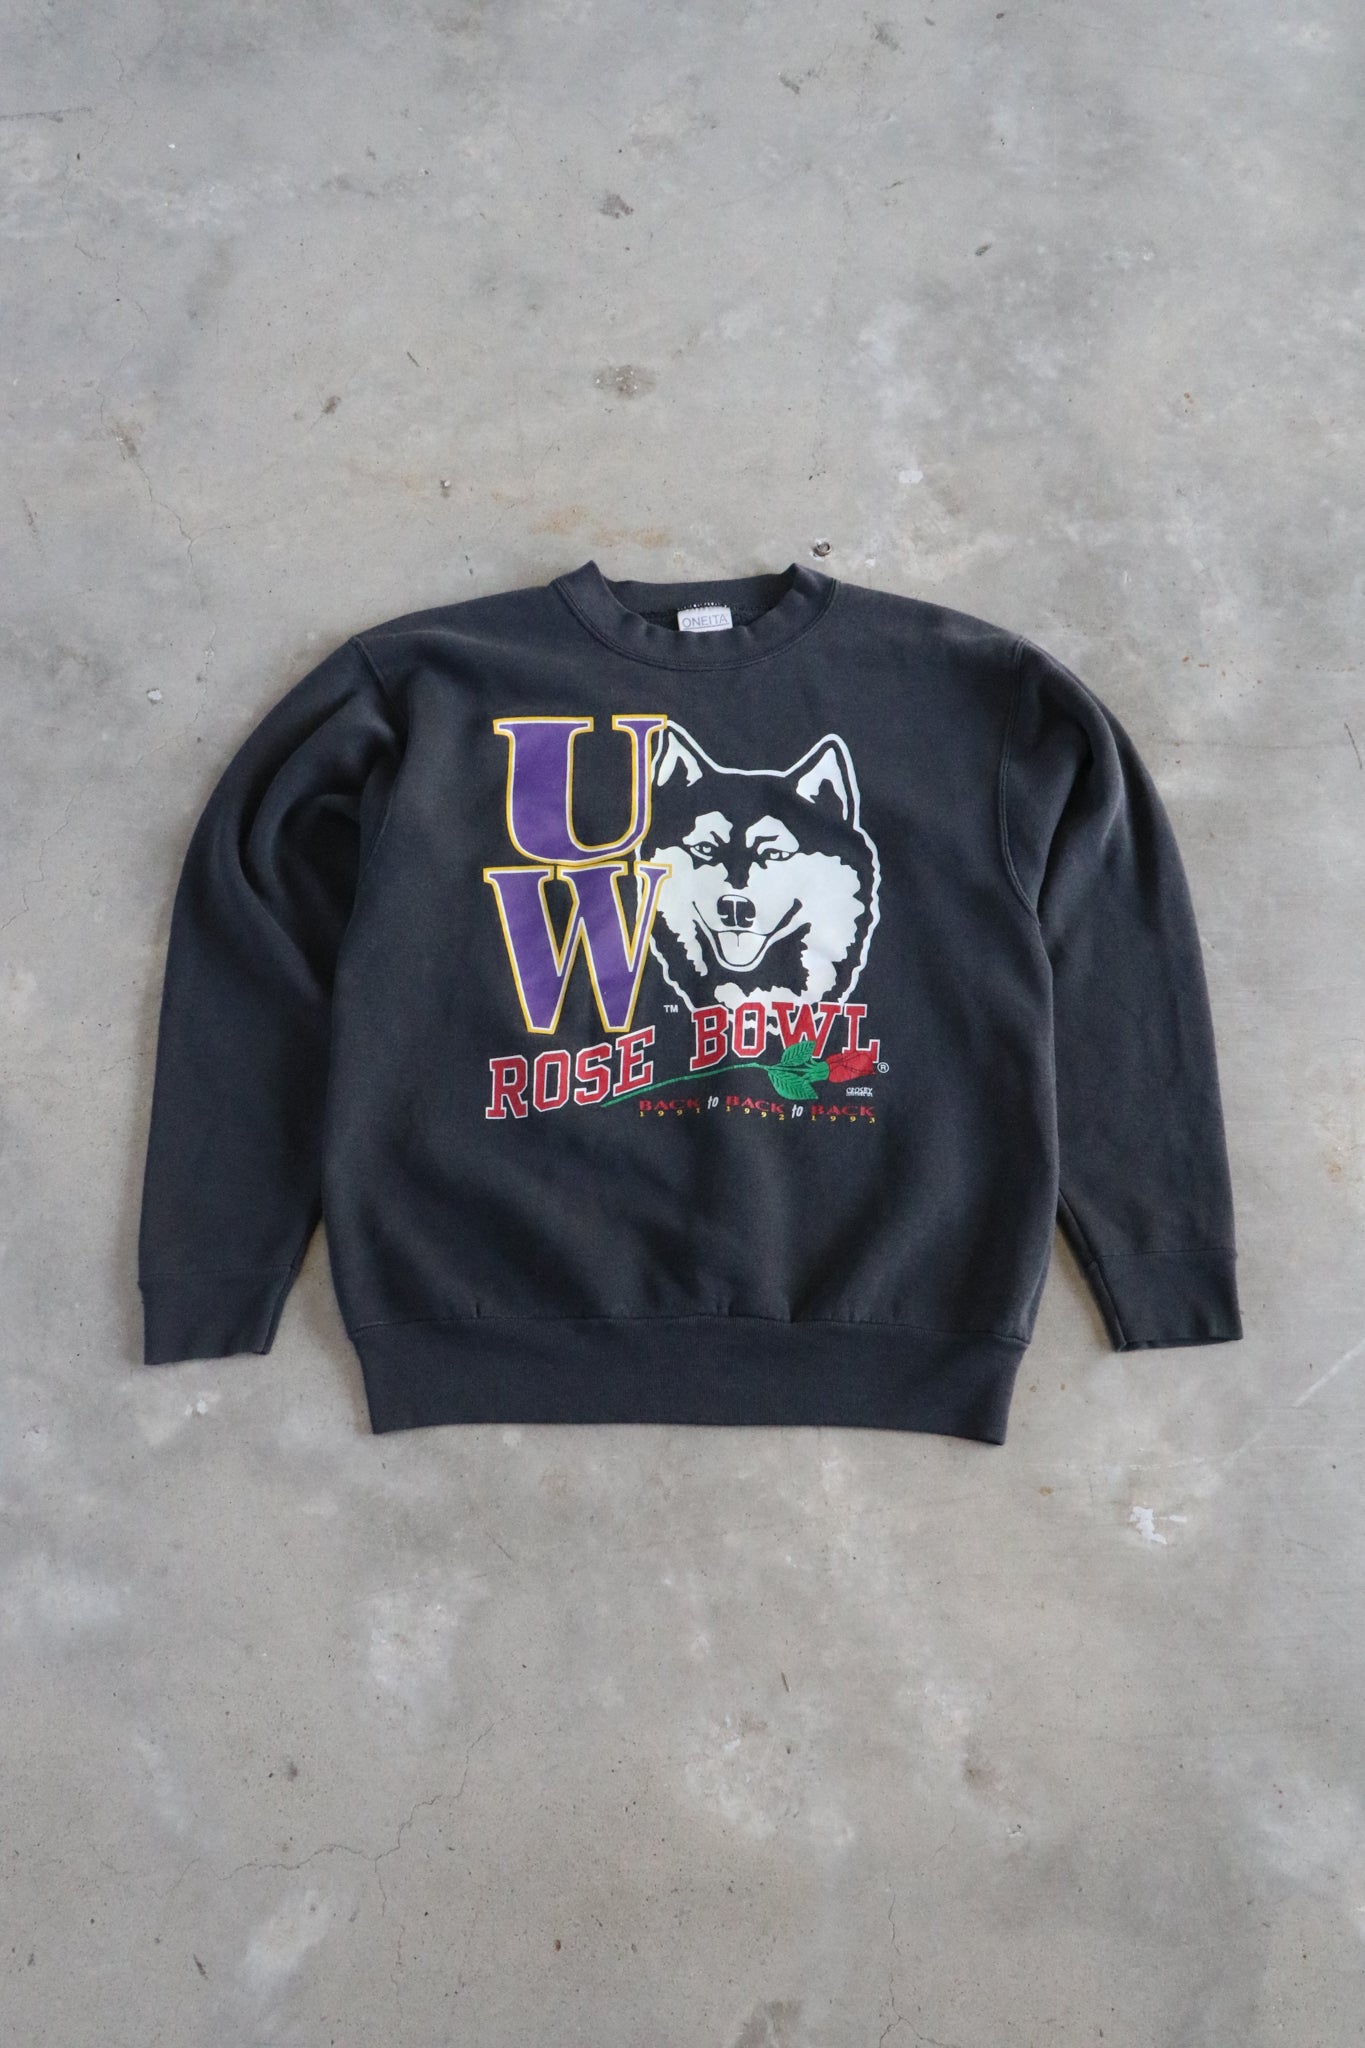 Vintage 1993 University of Washington Sweater Small